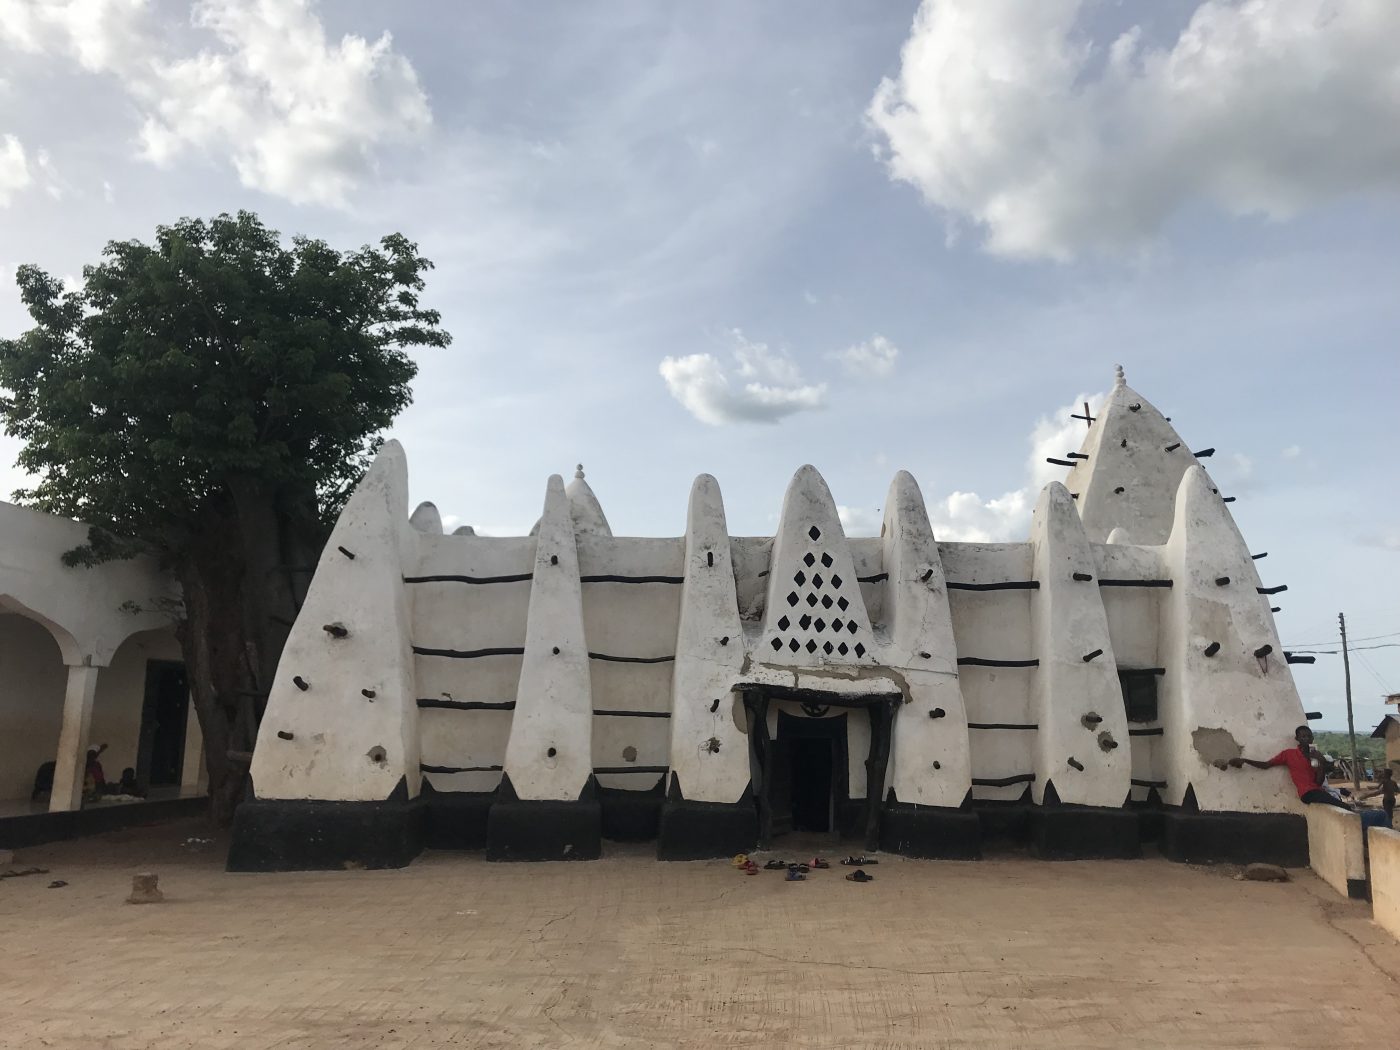 The front side of Larabanga Mosque